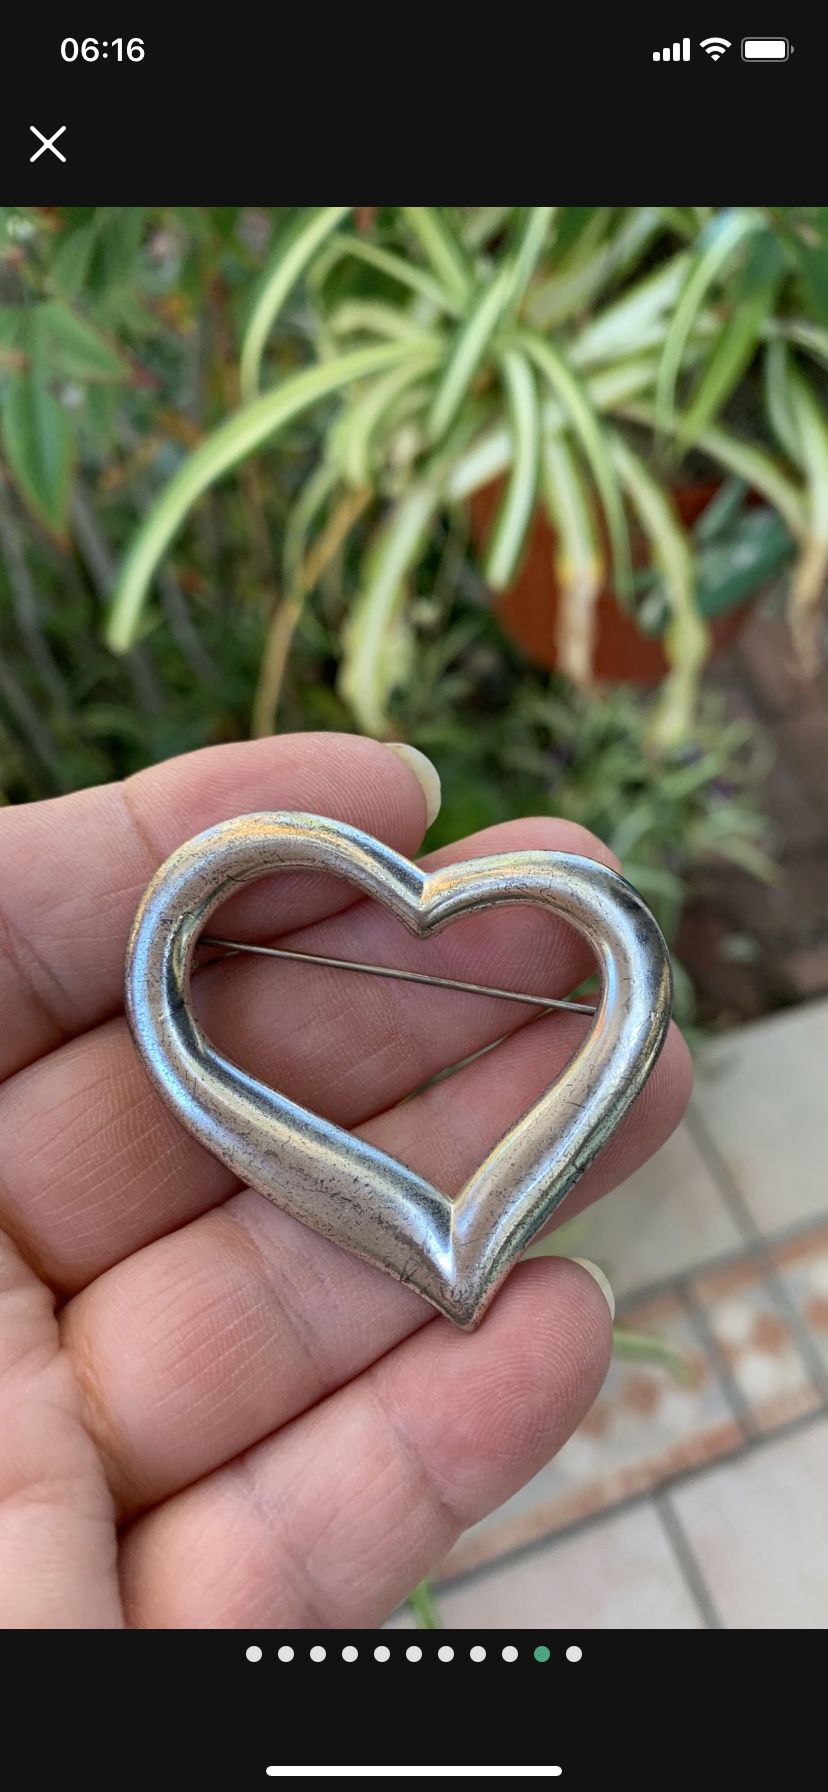 Heart Shaped Broach/pin & Decoration ❤️